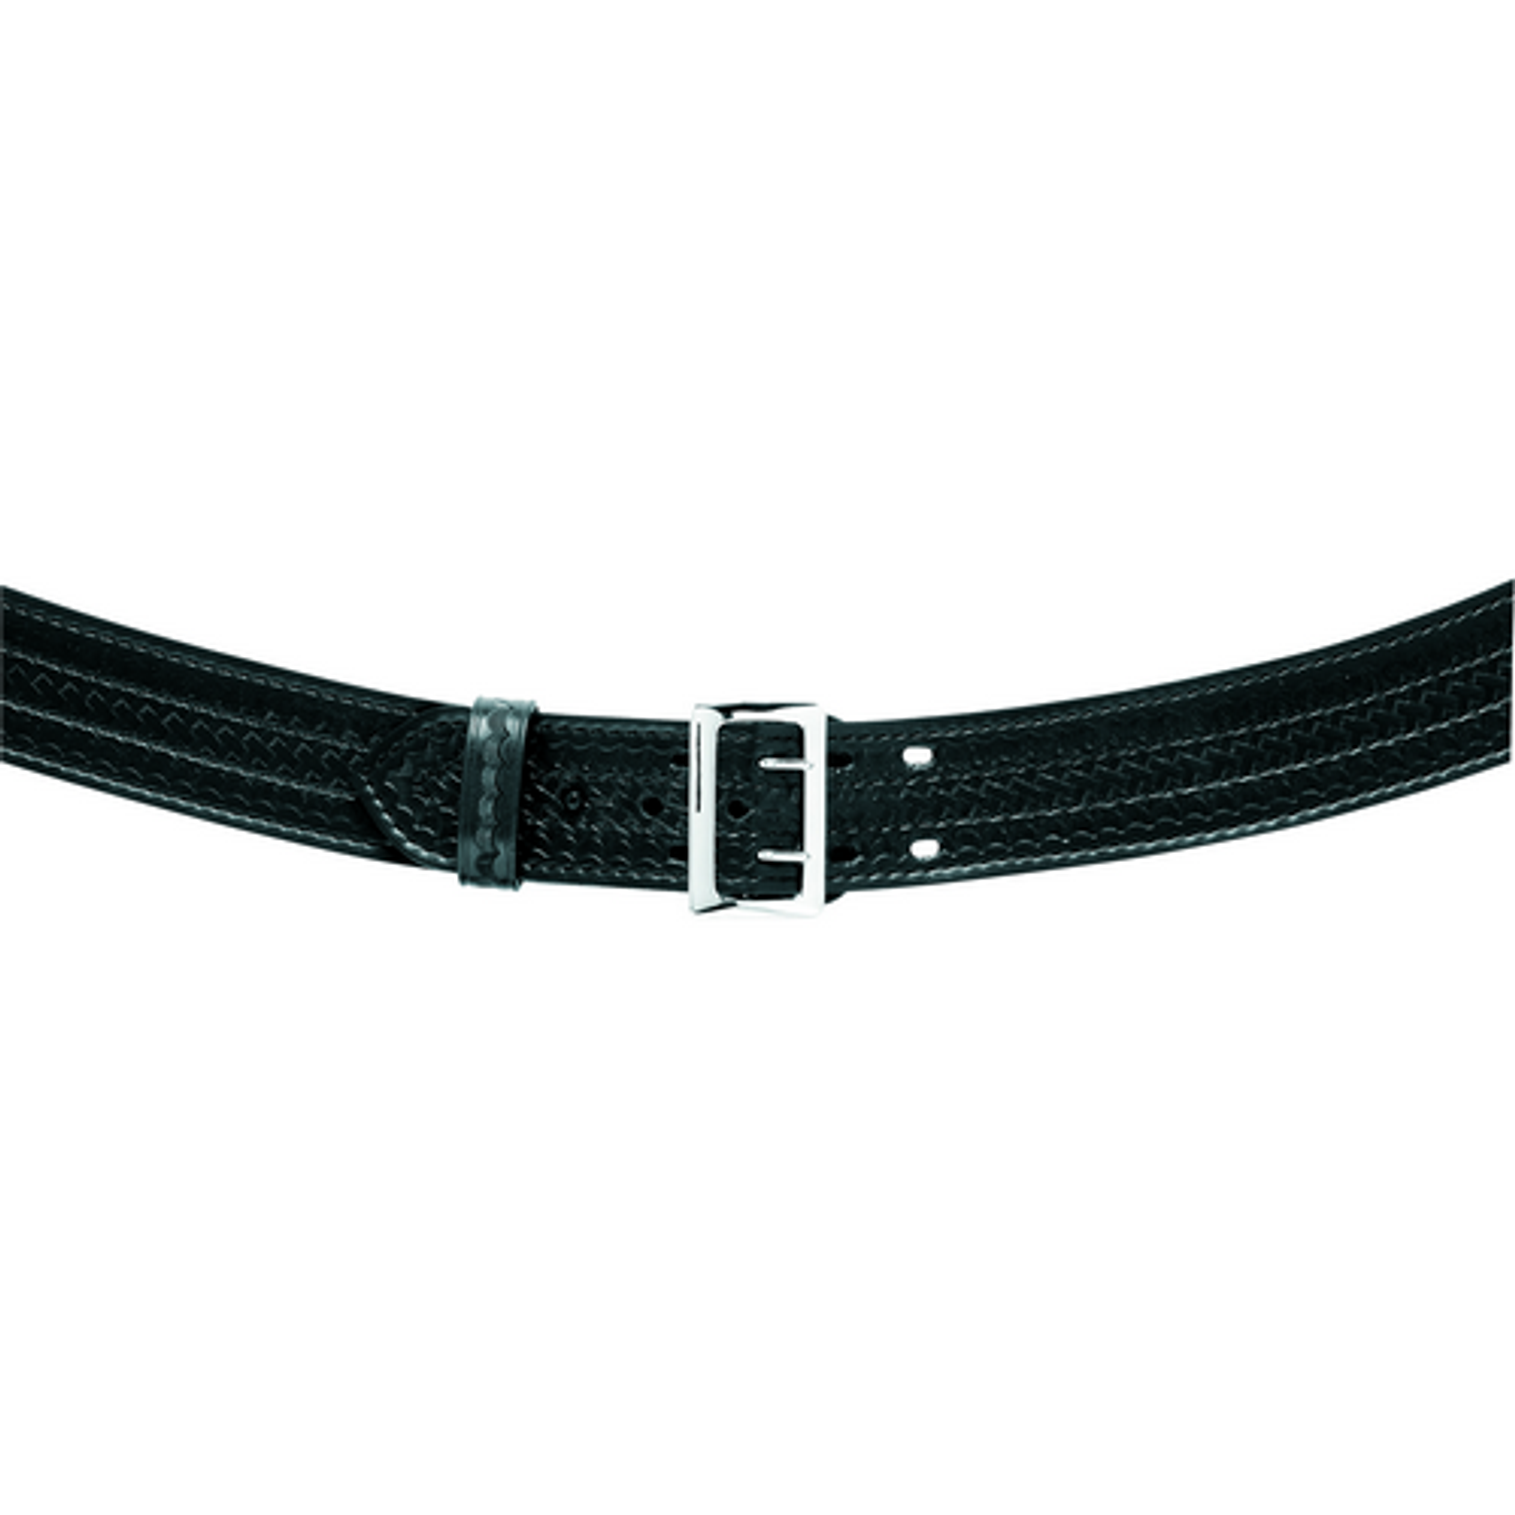 872 - Contoured Duty Belt, Suede Lined, 2.25 (58mm) - KR872-32-9B